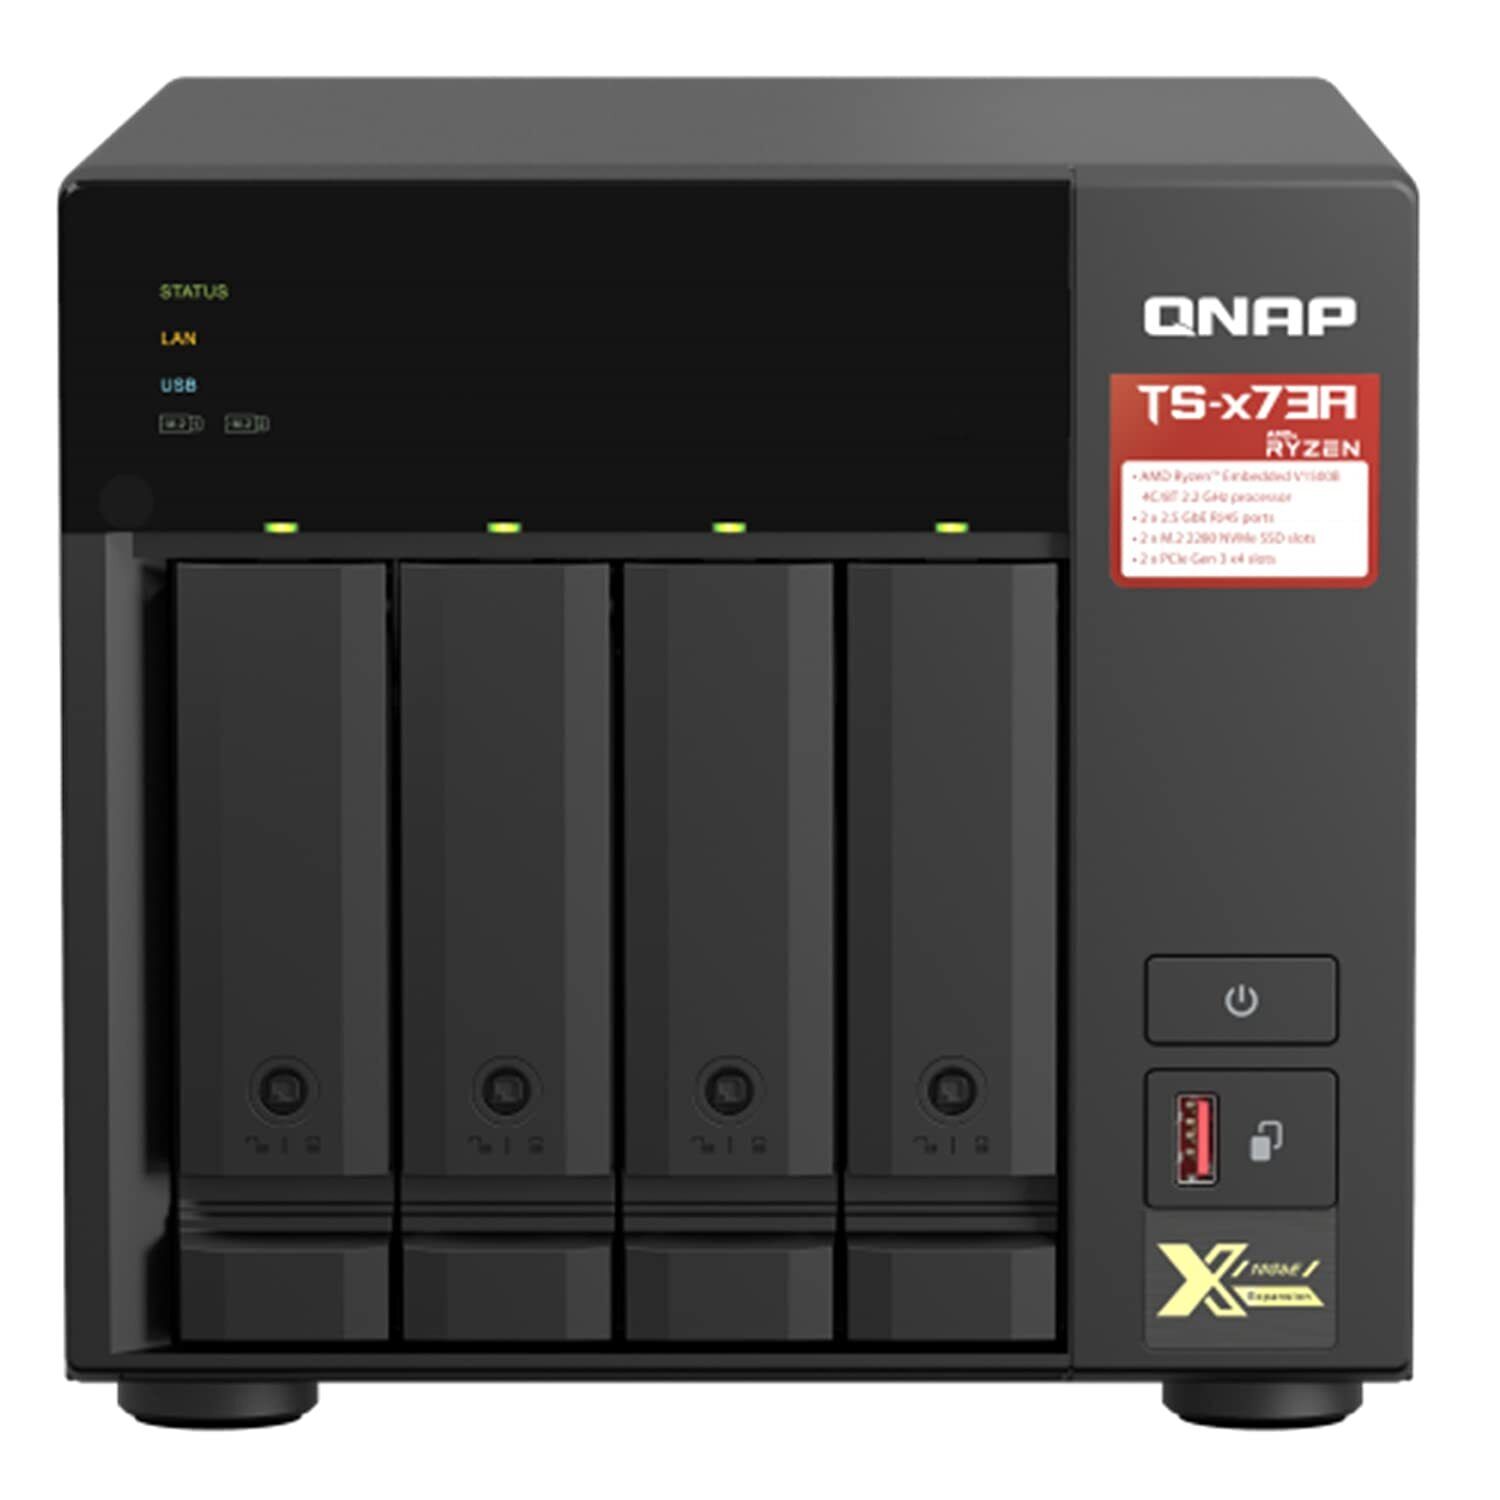 QNAP TS-473A-8G-US 4 Bay High-Speed Desktop NAS with AMD Ryzen 4-core CPU, 8GB